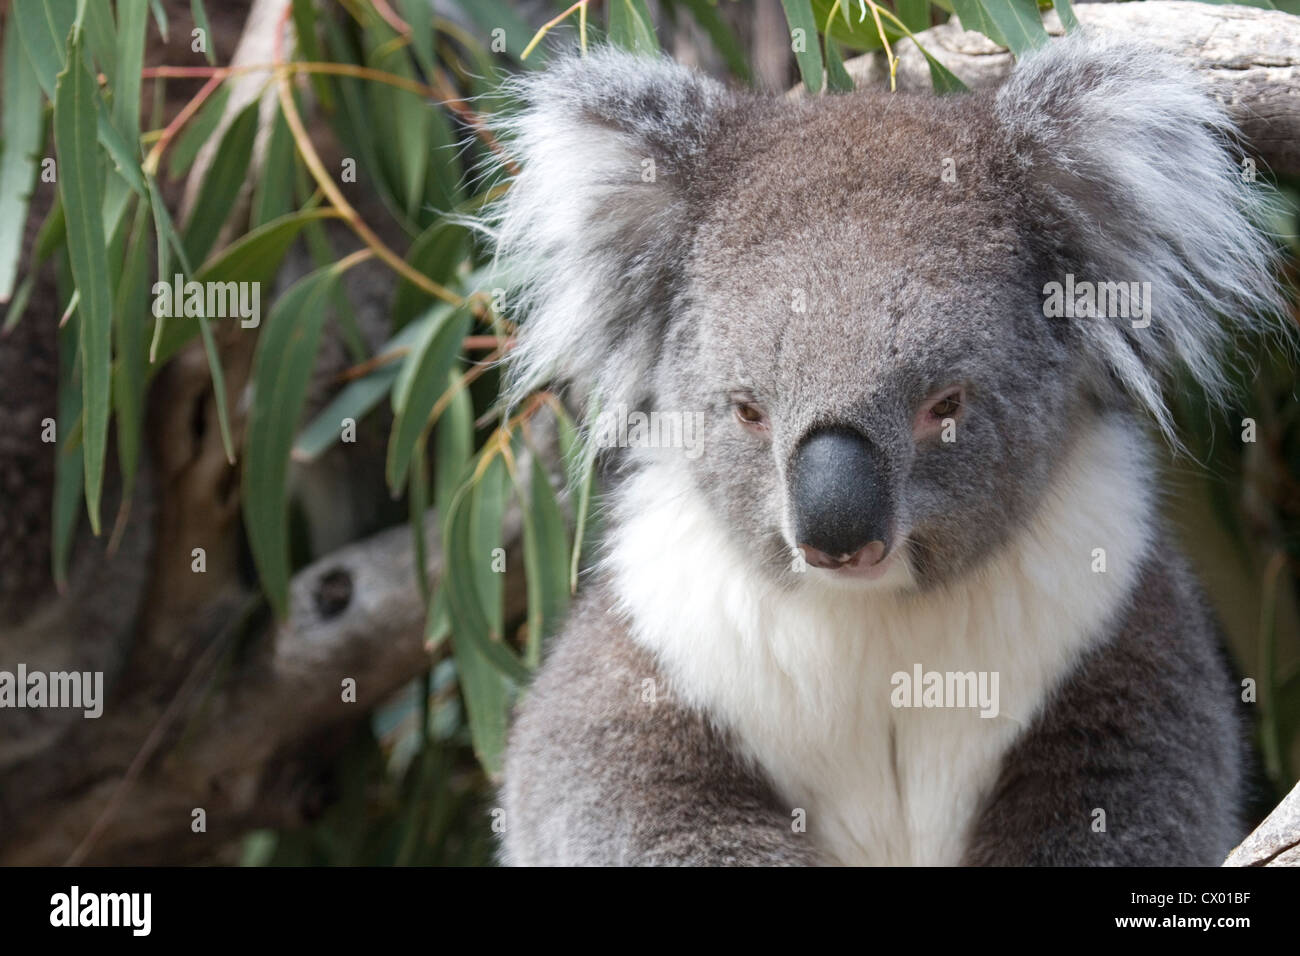 Koala in the eucalyptus leaves, Australia Stock Photo